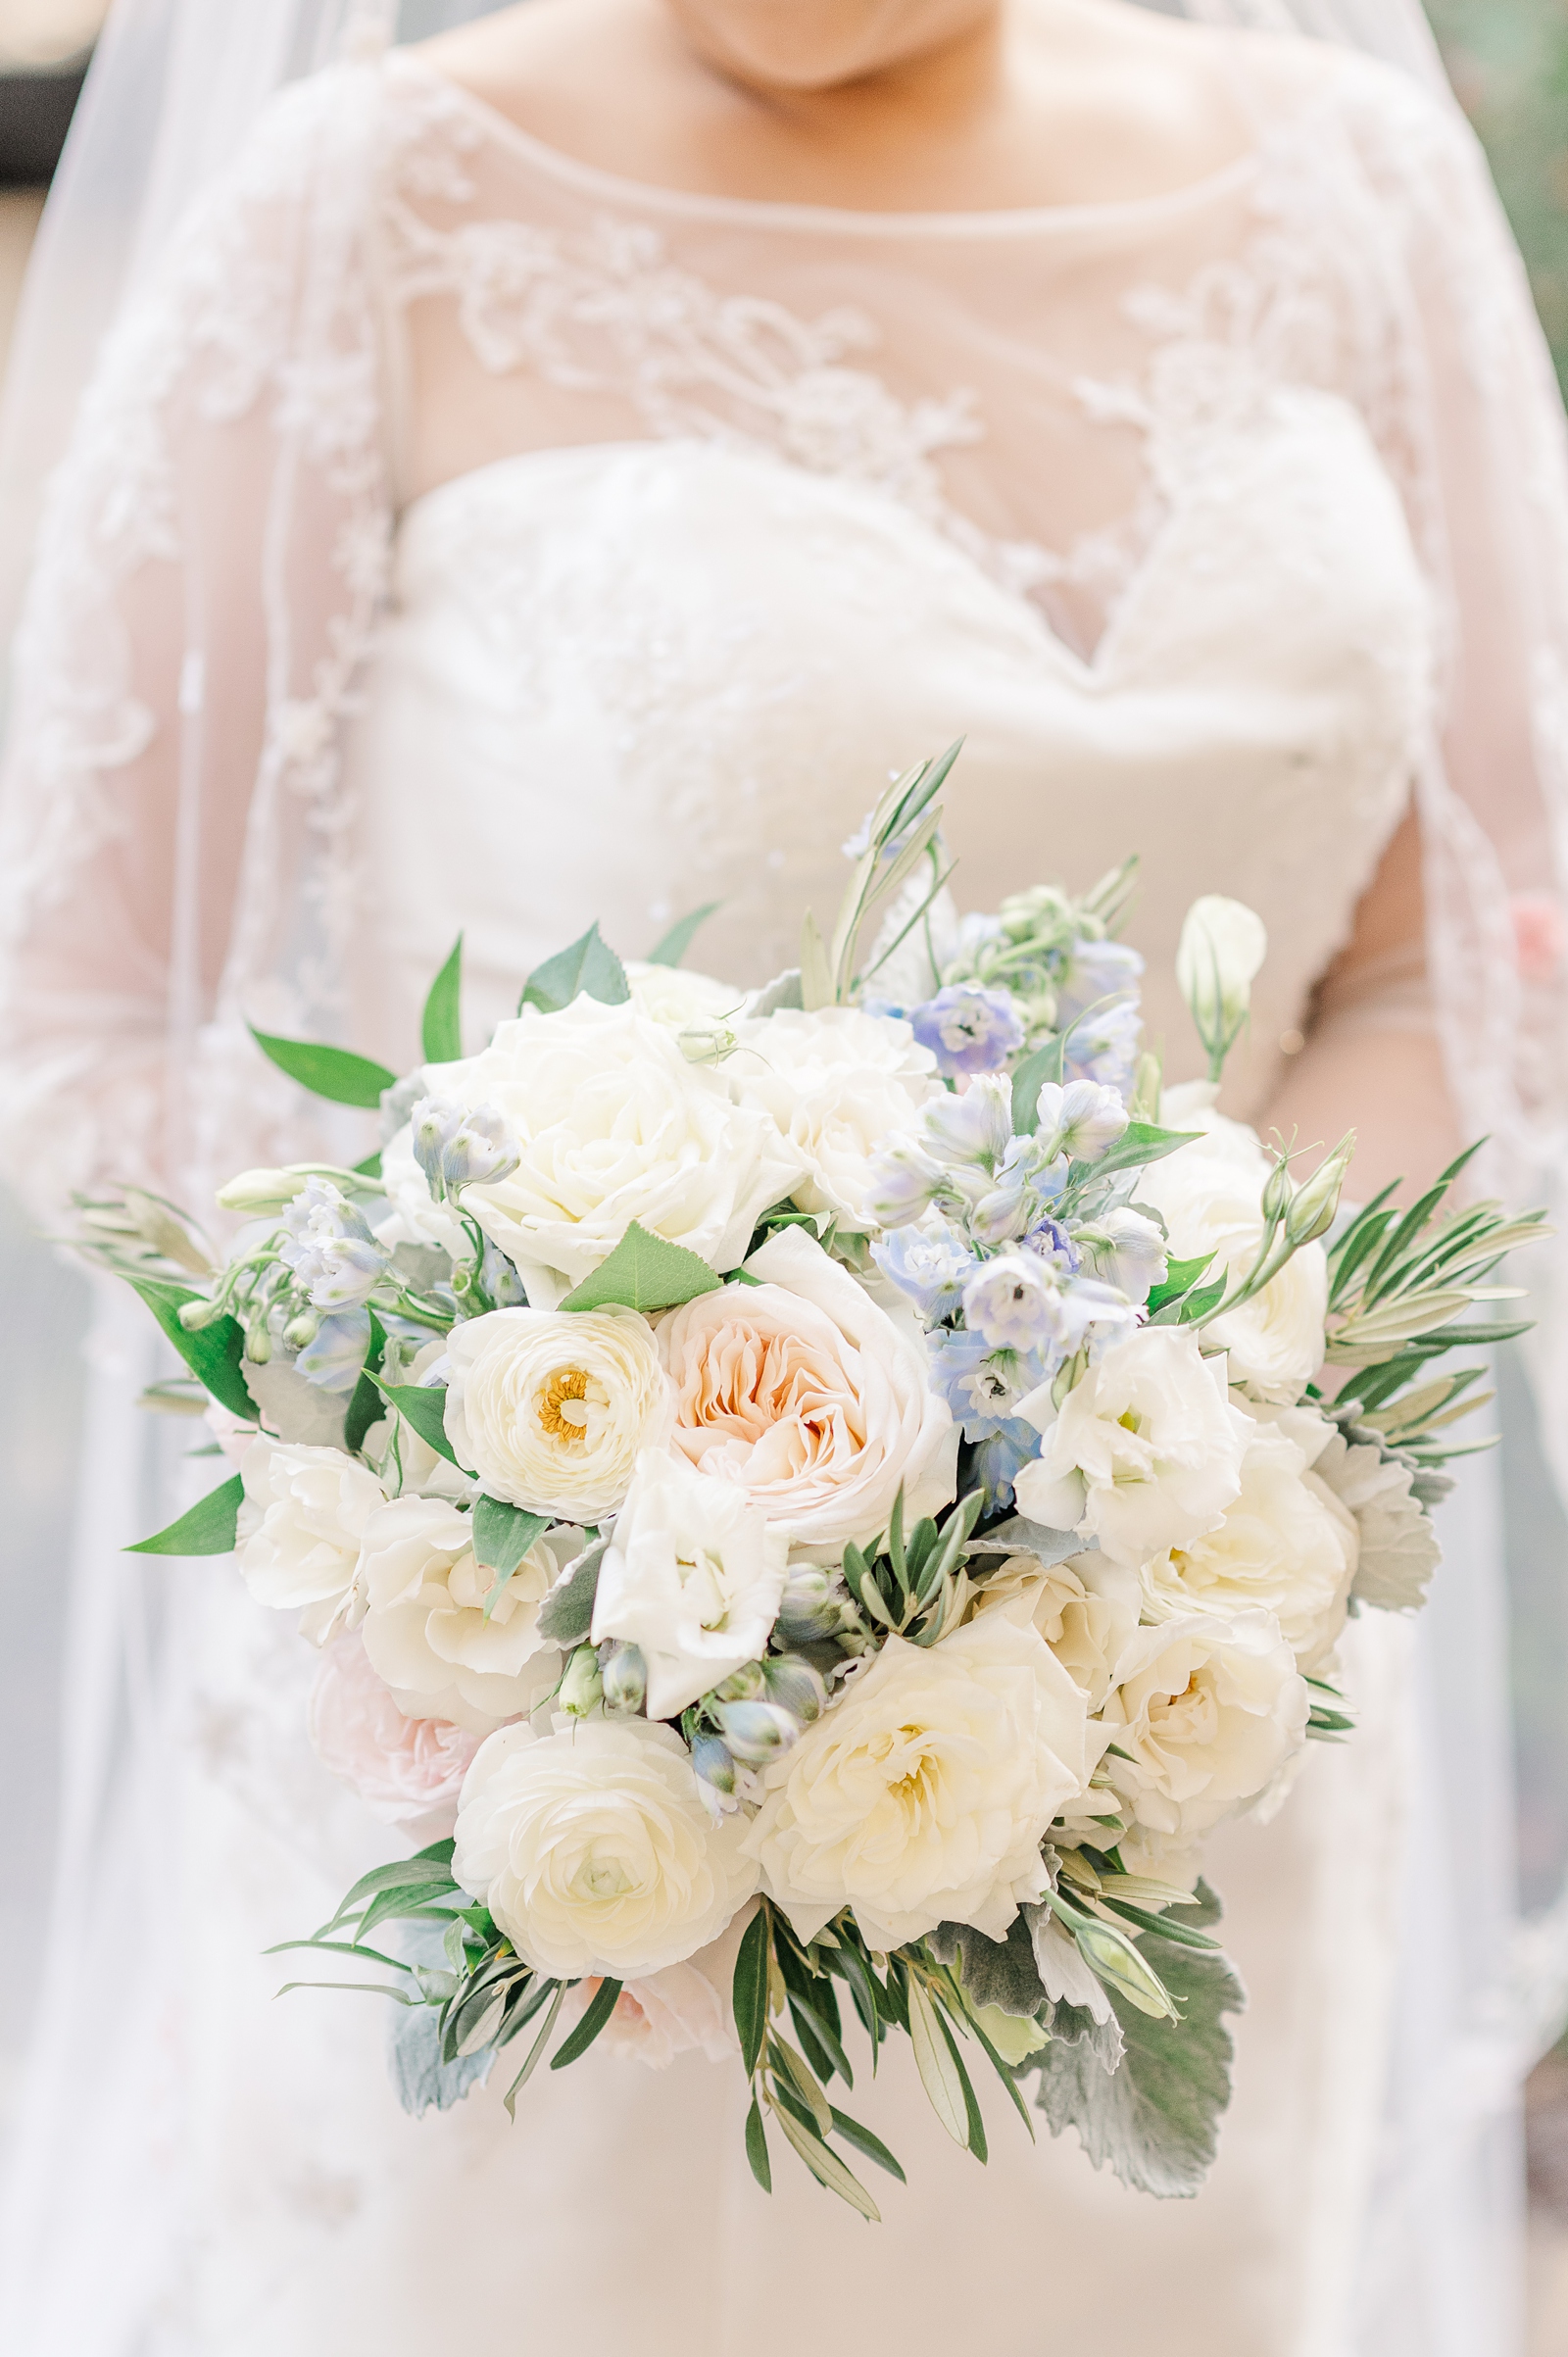 Bridal Bouquet by Richmond Florist Vogue Flowers. Richmond Intimate Wedding Photographer Kailey Brianne Photography.
